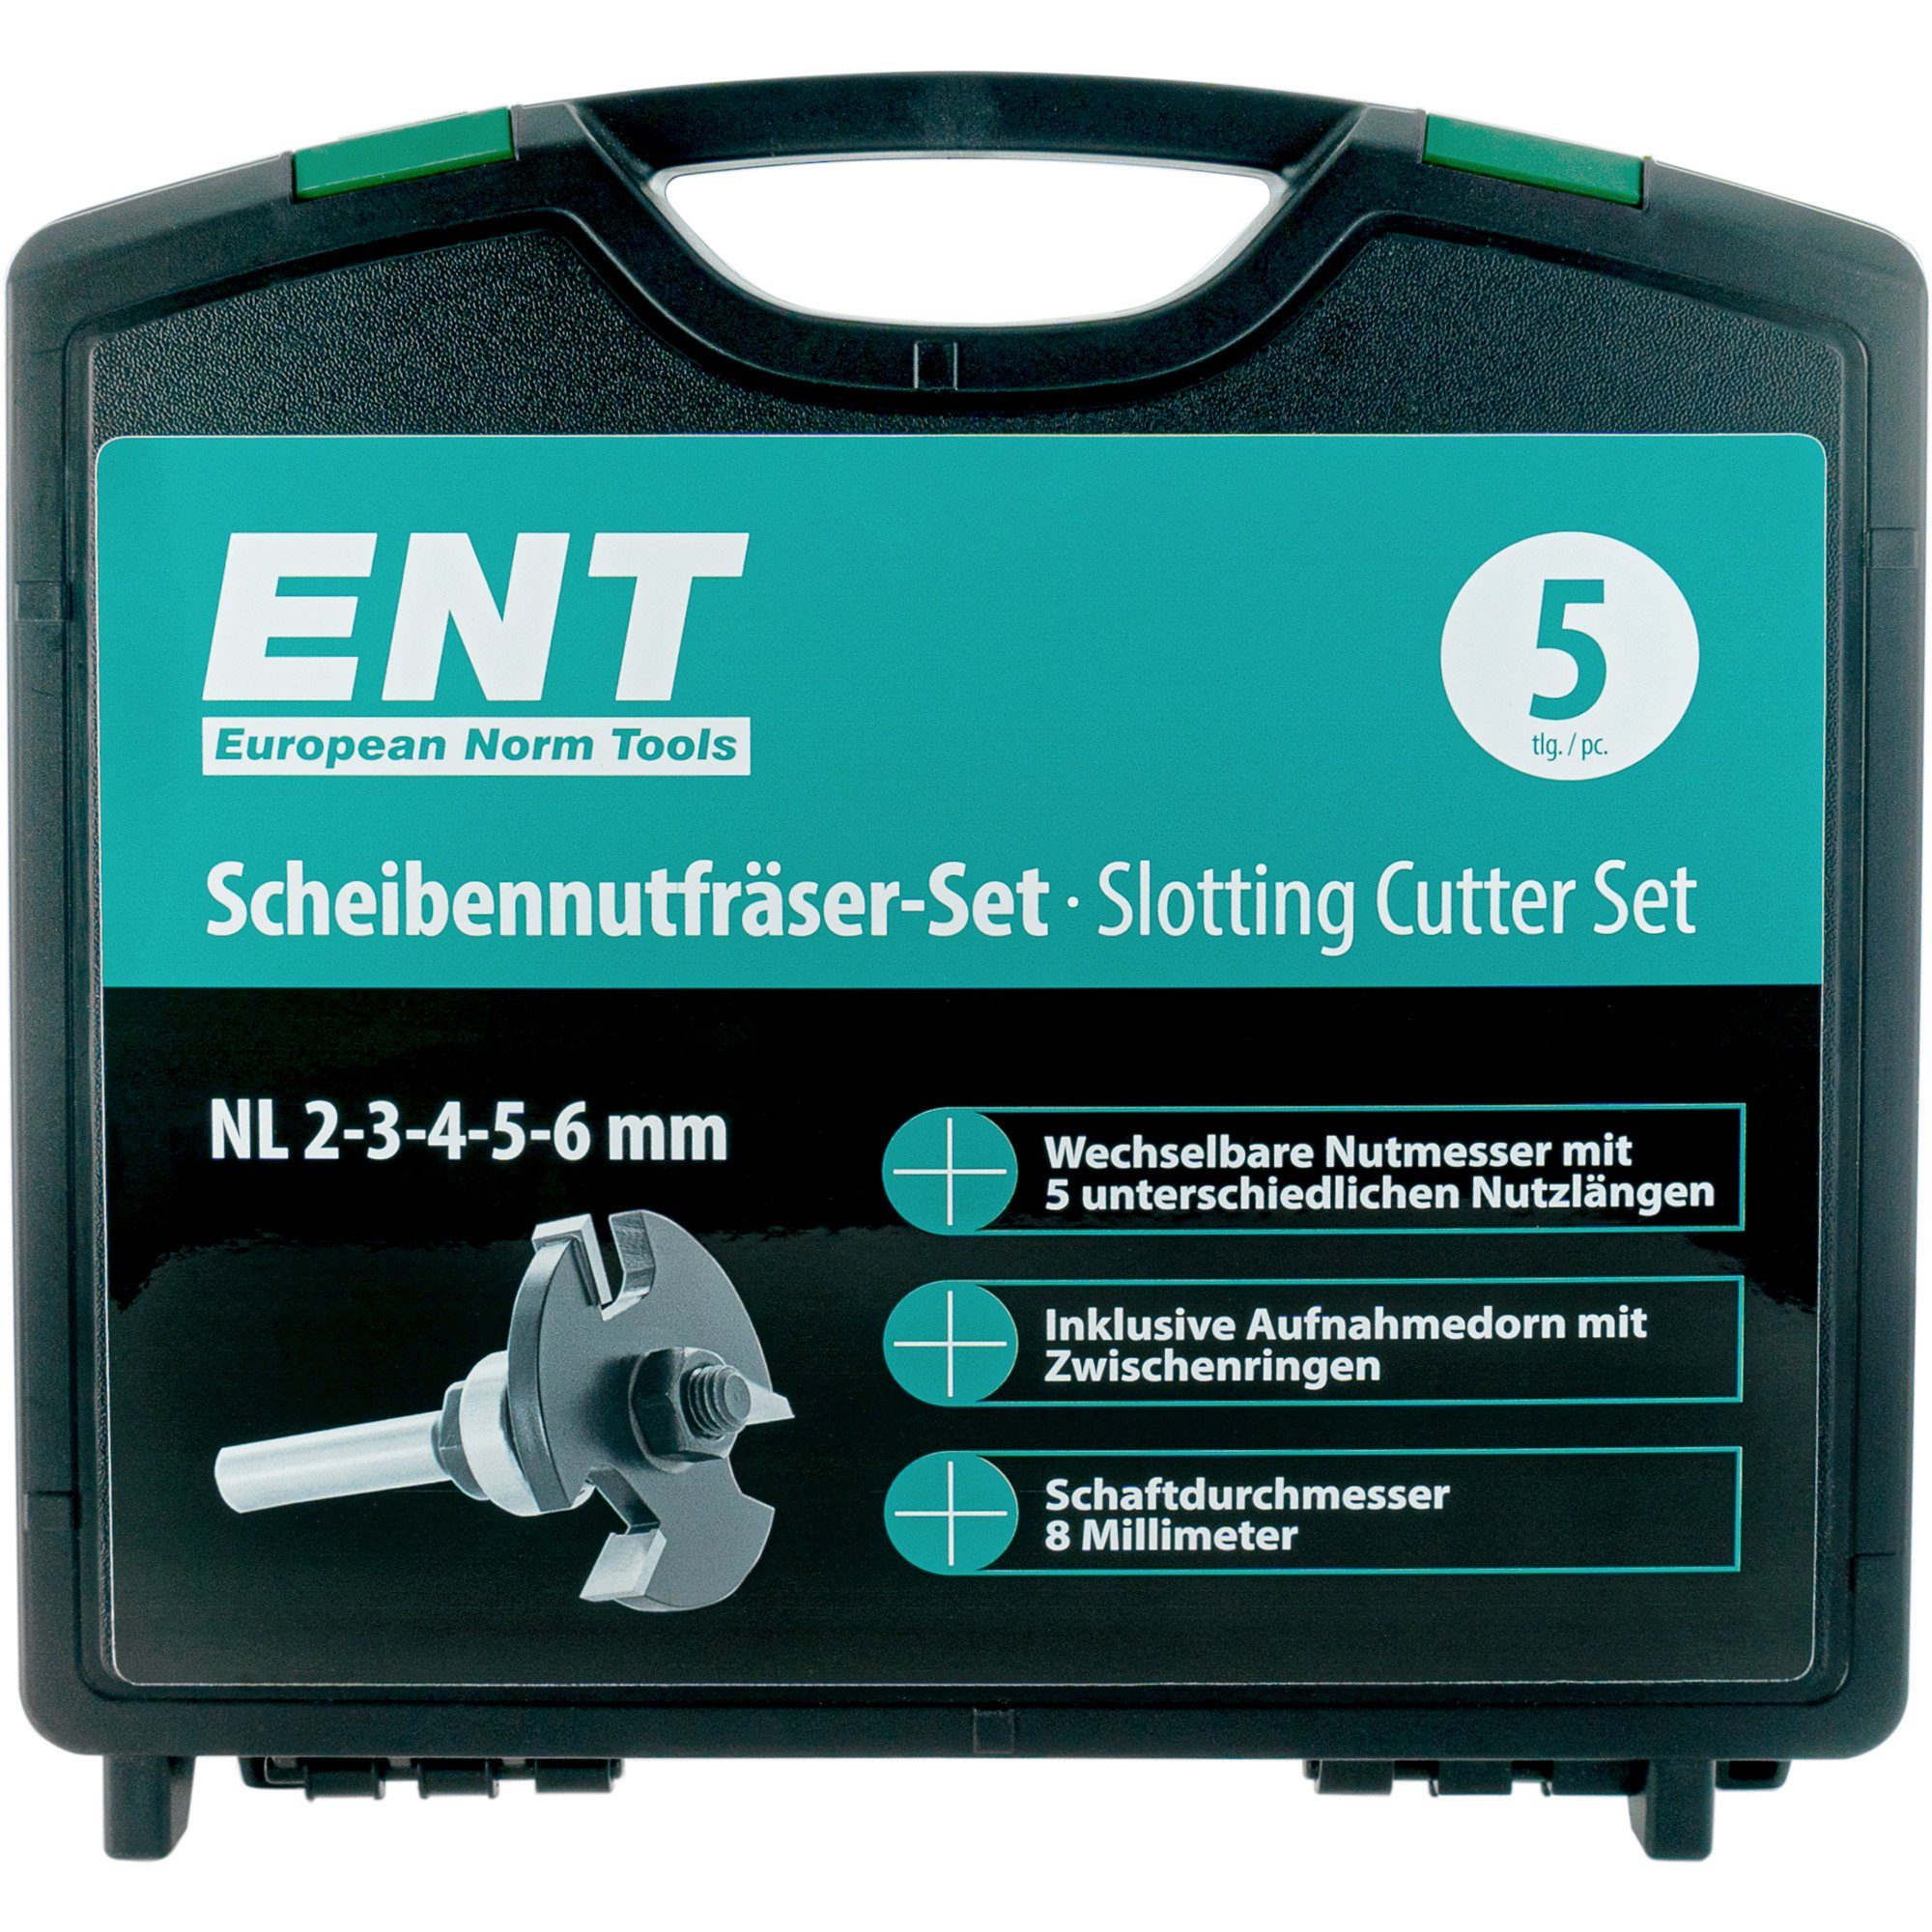 ENT European Norm Fräsbohrer 47,6 Ø 2-3-4-5-6 mm, 8 10-tlg. Schaft mm, Scheibennutfräser-Set, Breite Ø Hartmetall - mm ENT 09070 Tools in